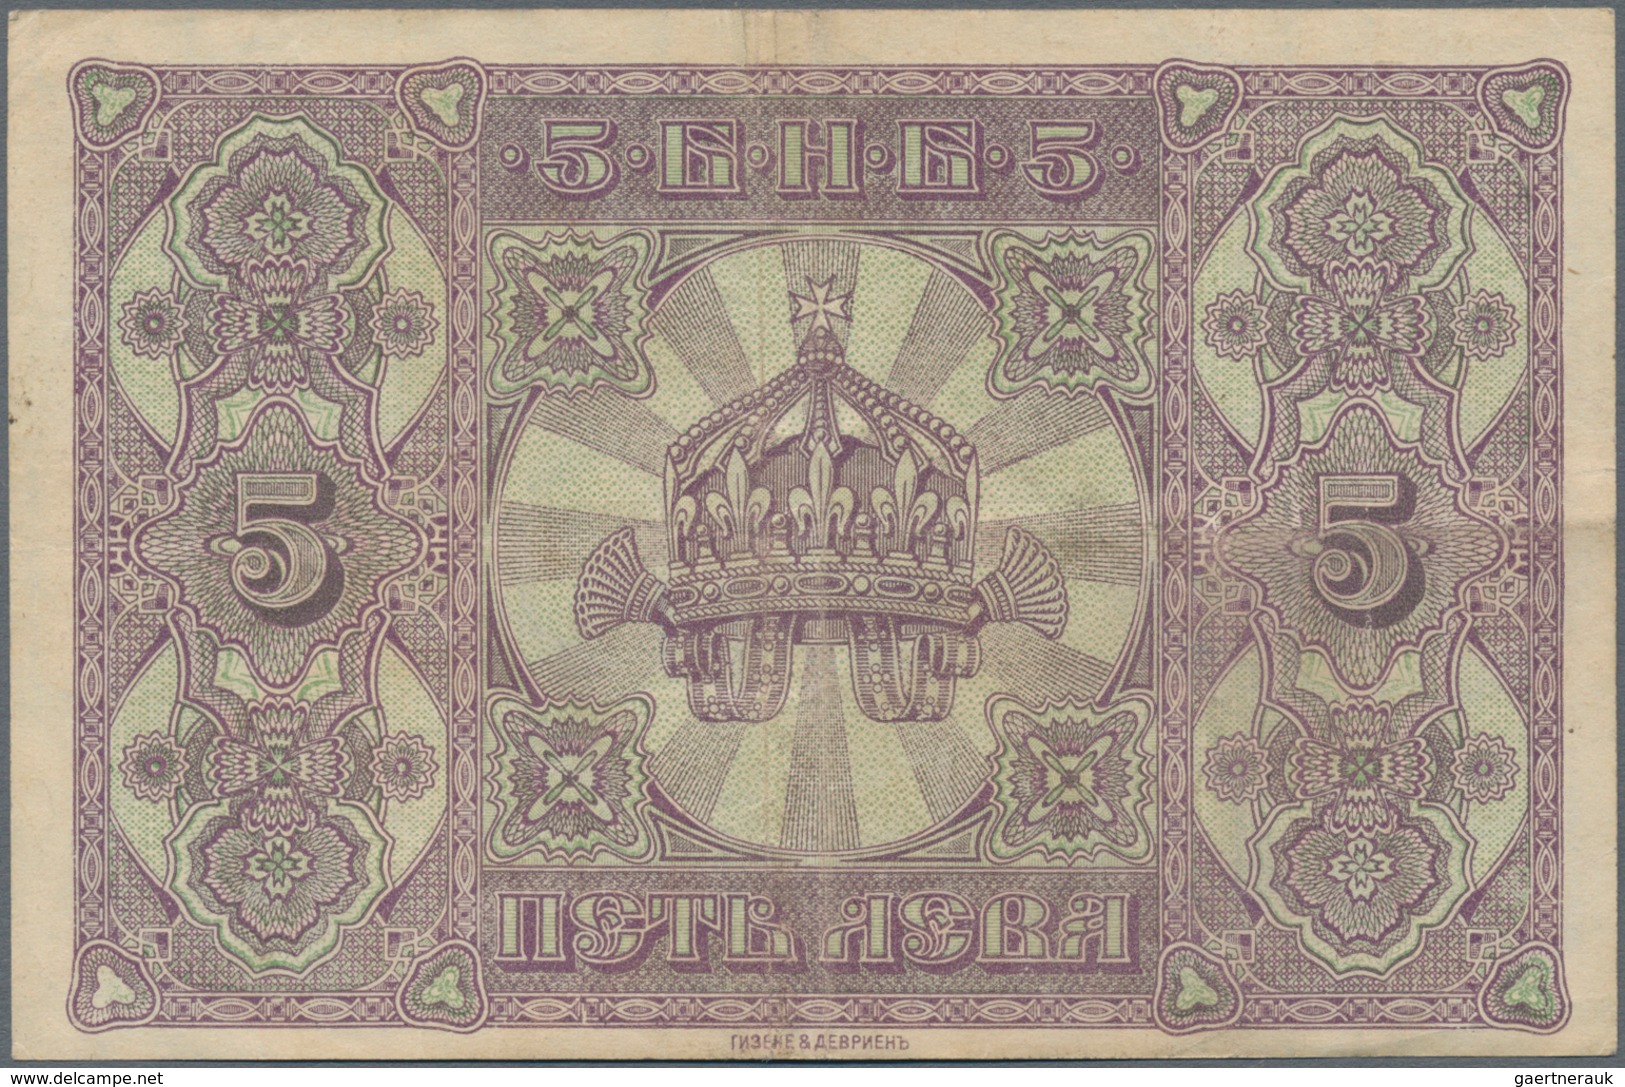 Bulgaria / Bulgarien: Very rare set with 8 banknotes comprising 10 Leva Srebro ND(1904) P.3b (VF), 2